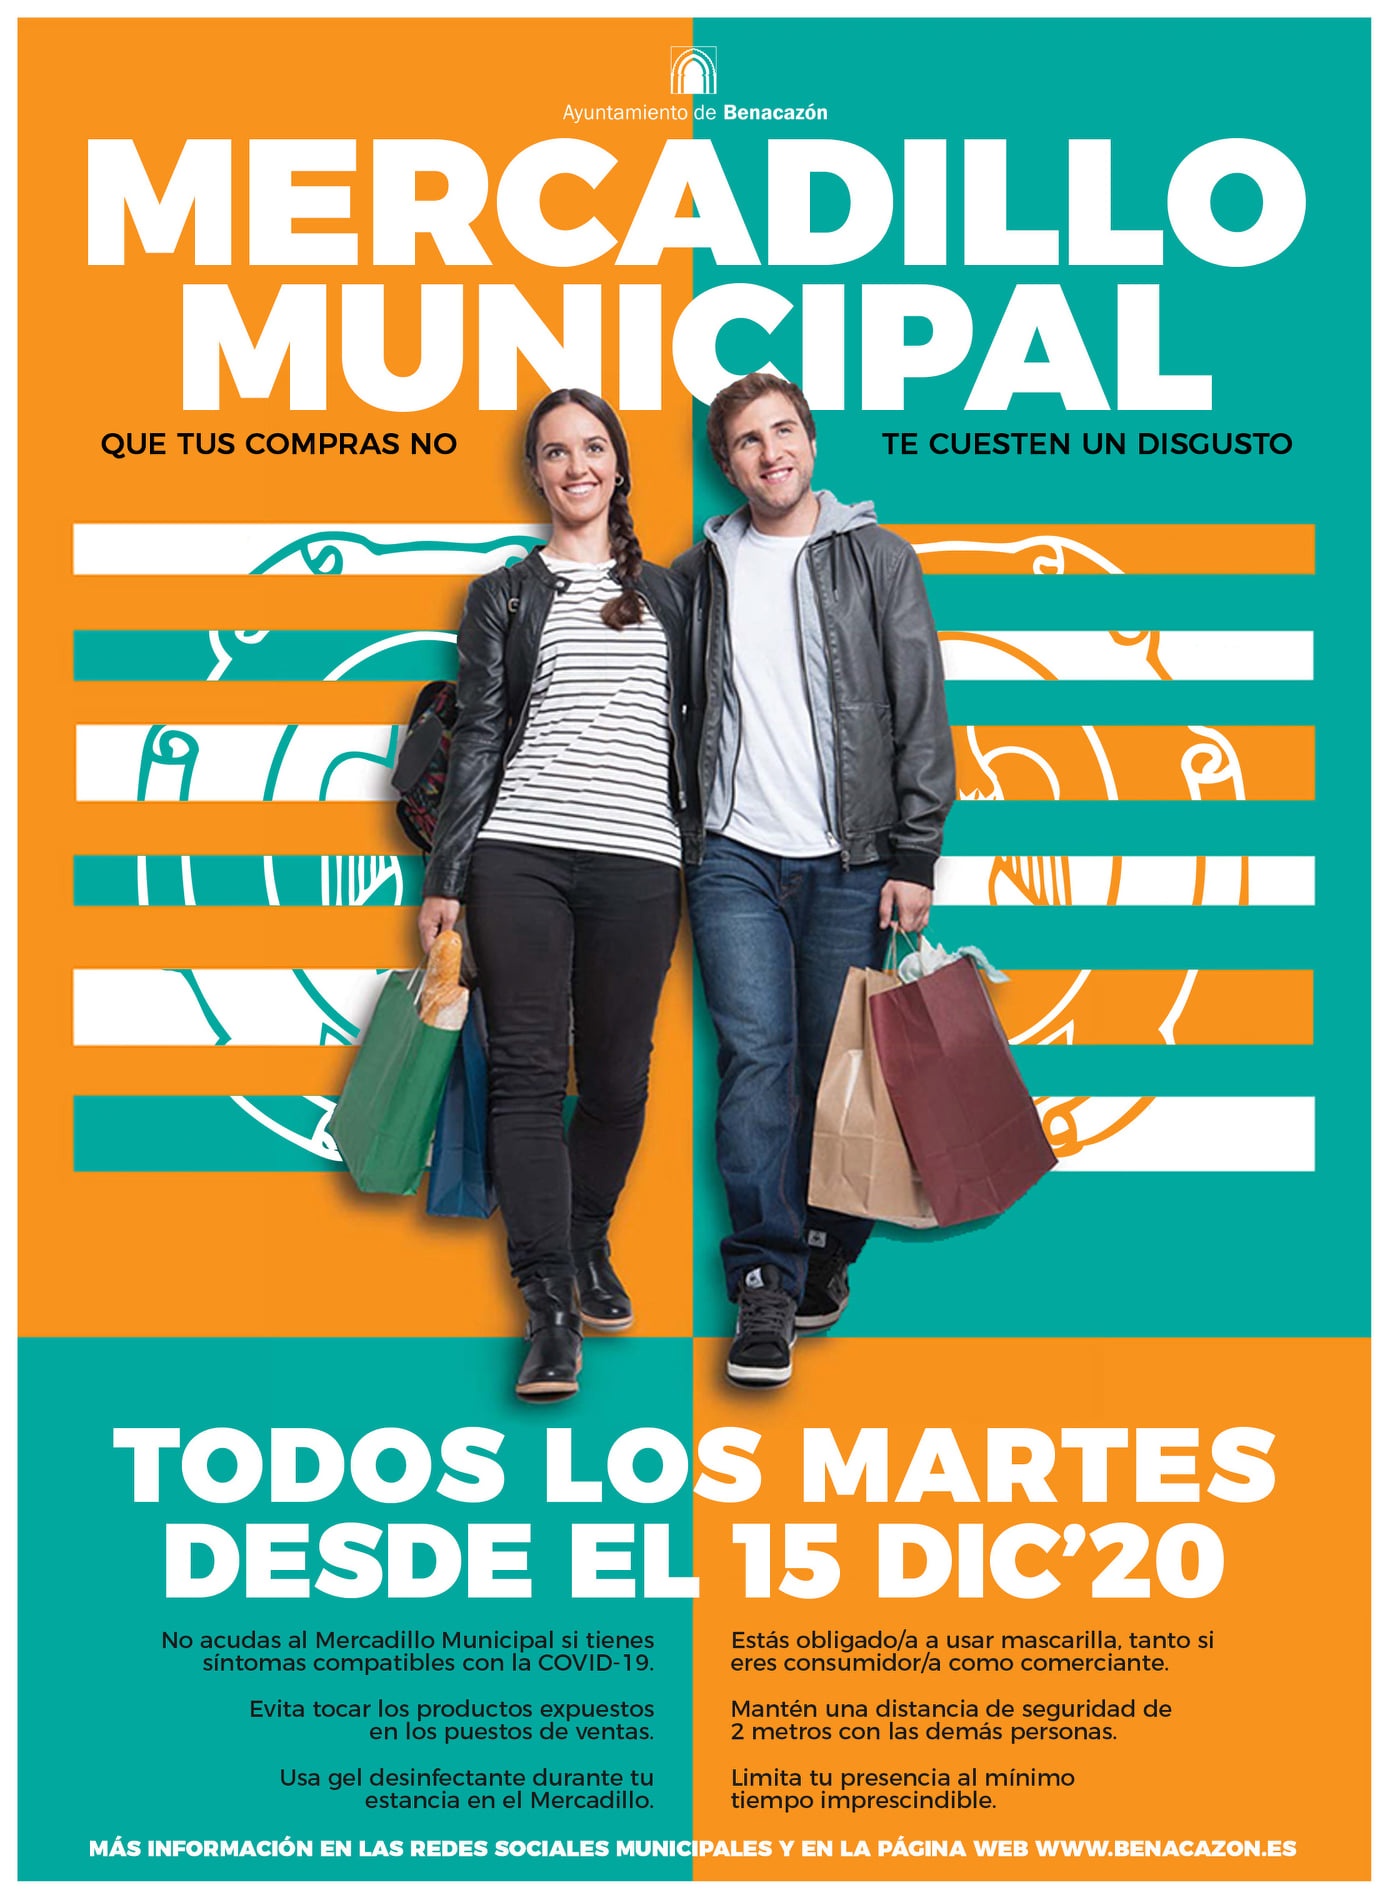 ADL_Mercadillo Municipal